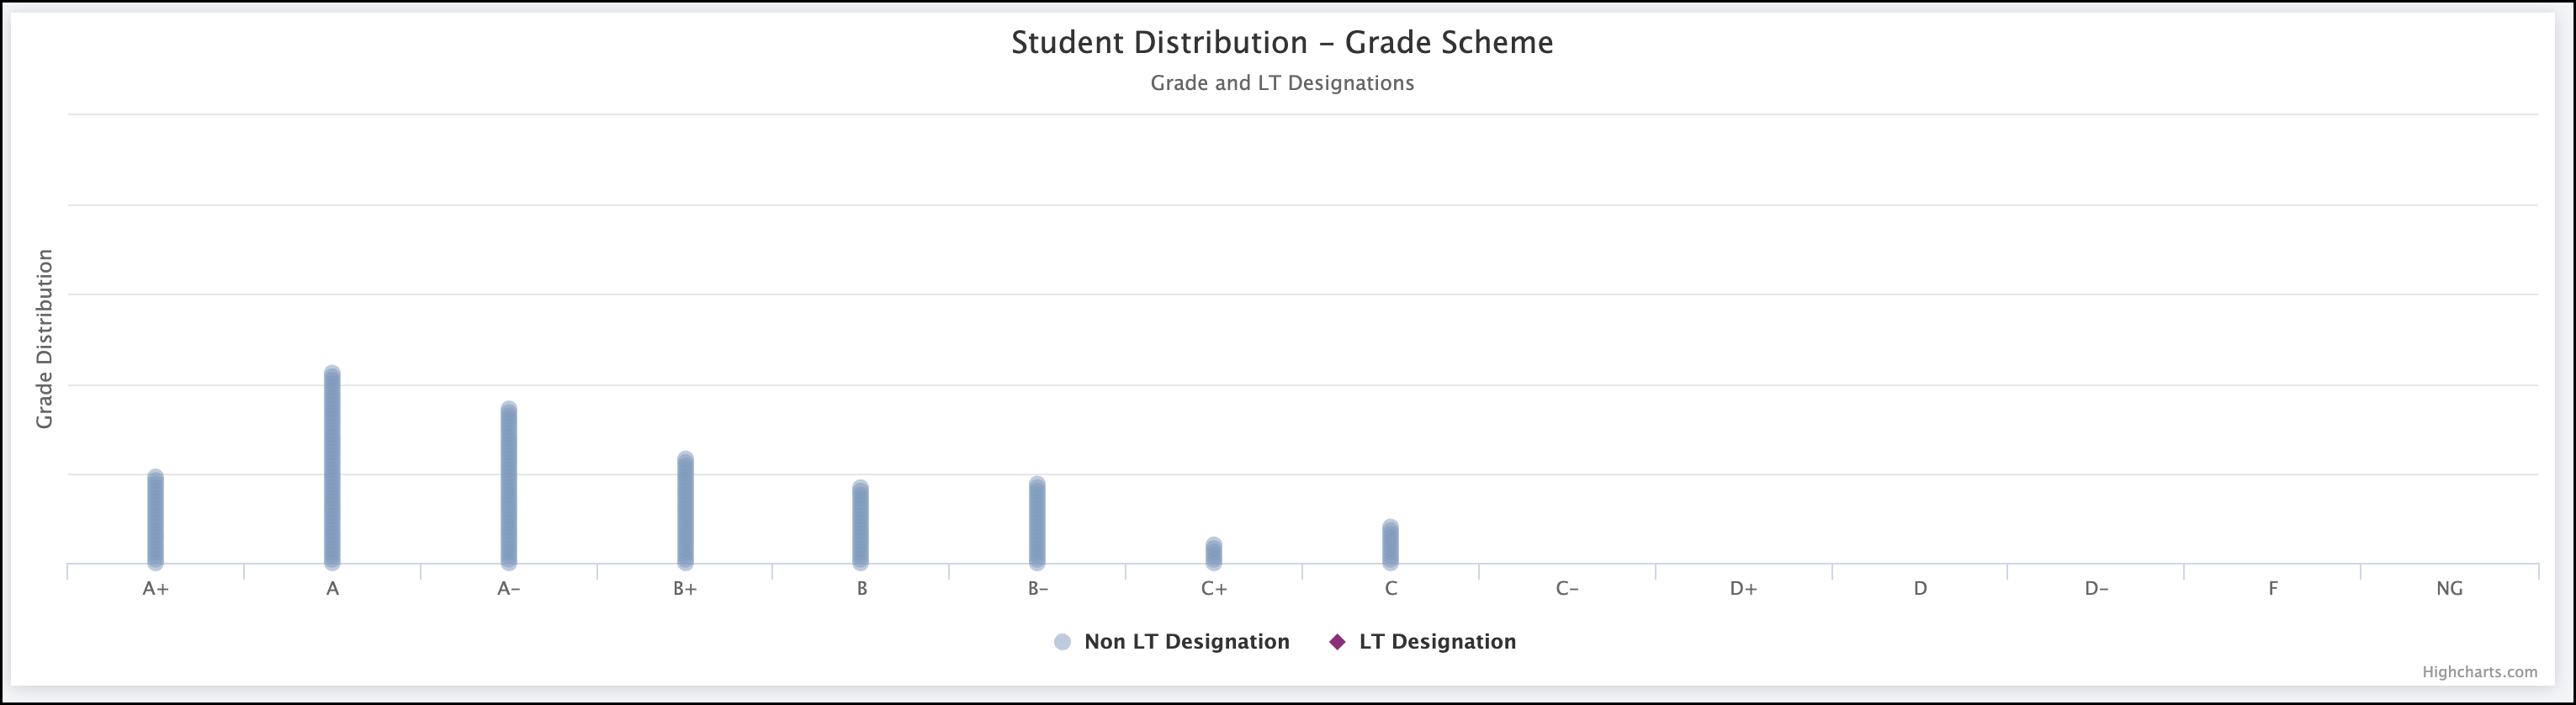 Grading - Student Distribution